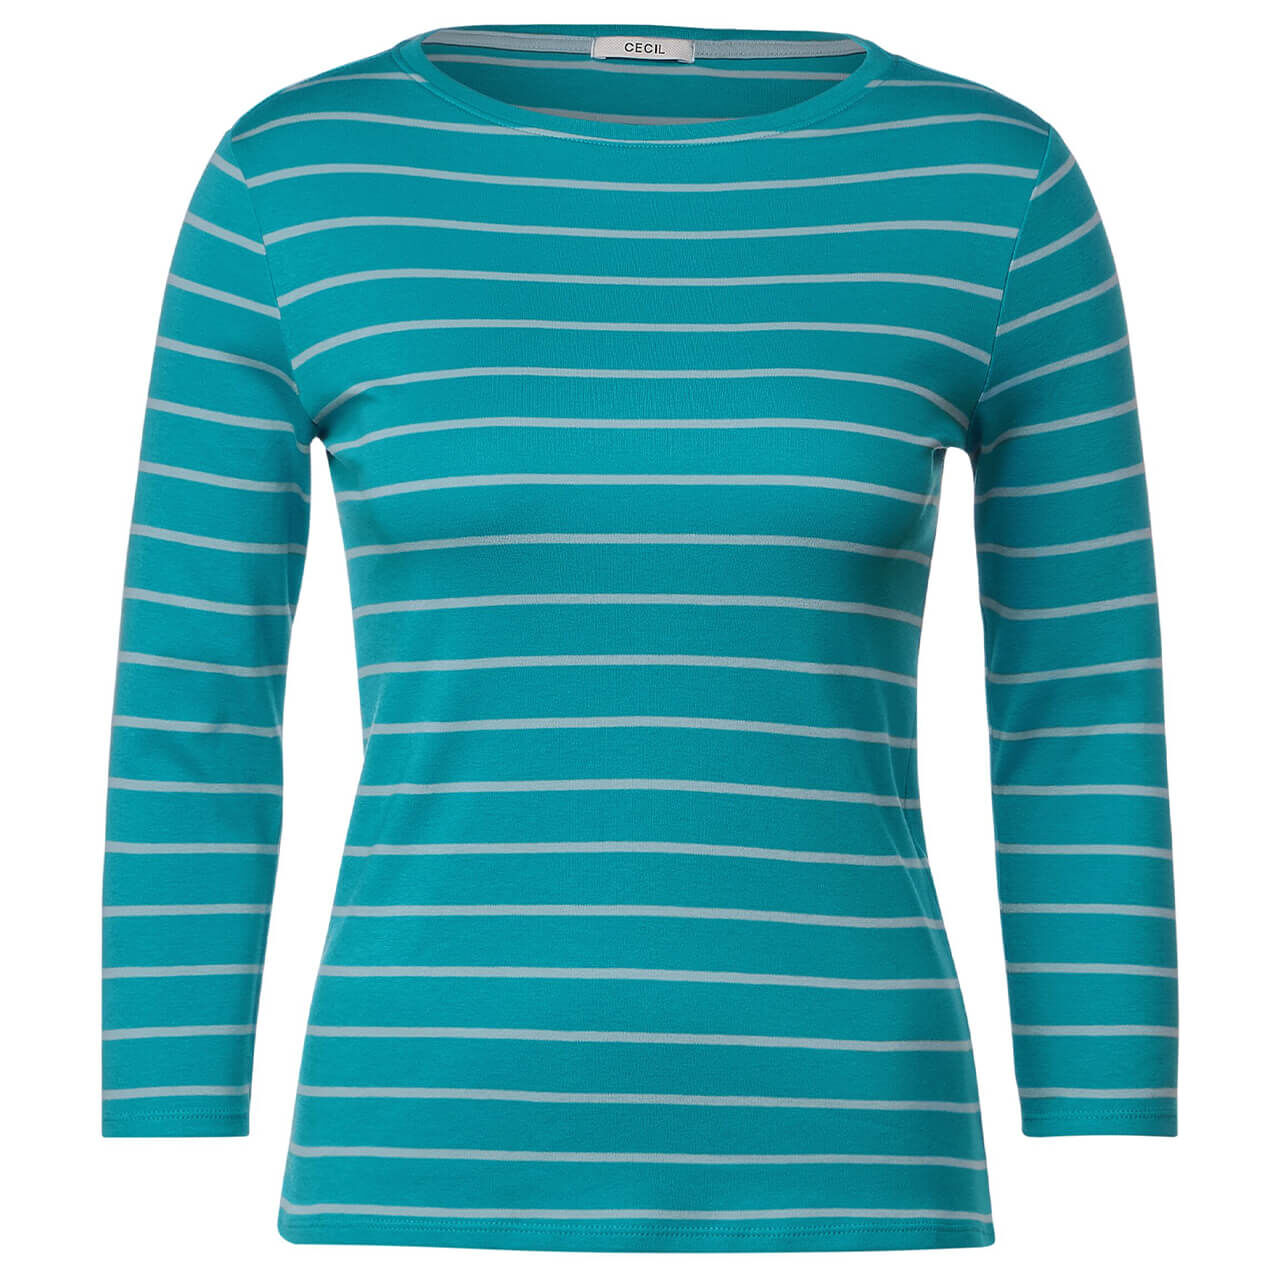 Cecil Damen 3/4 Arm Shirt Basic Boatneck frosted aqua blue stripes